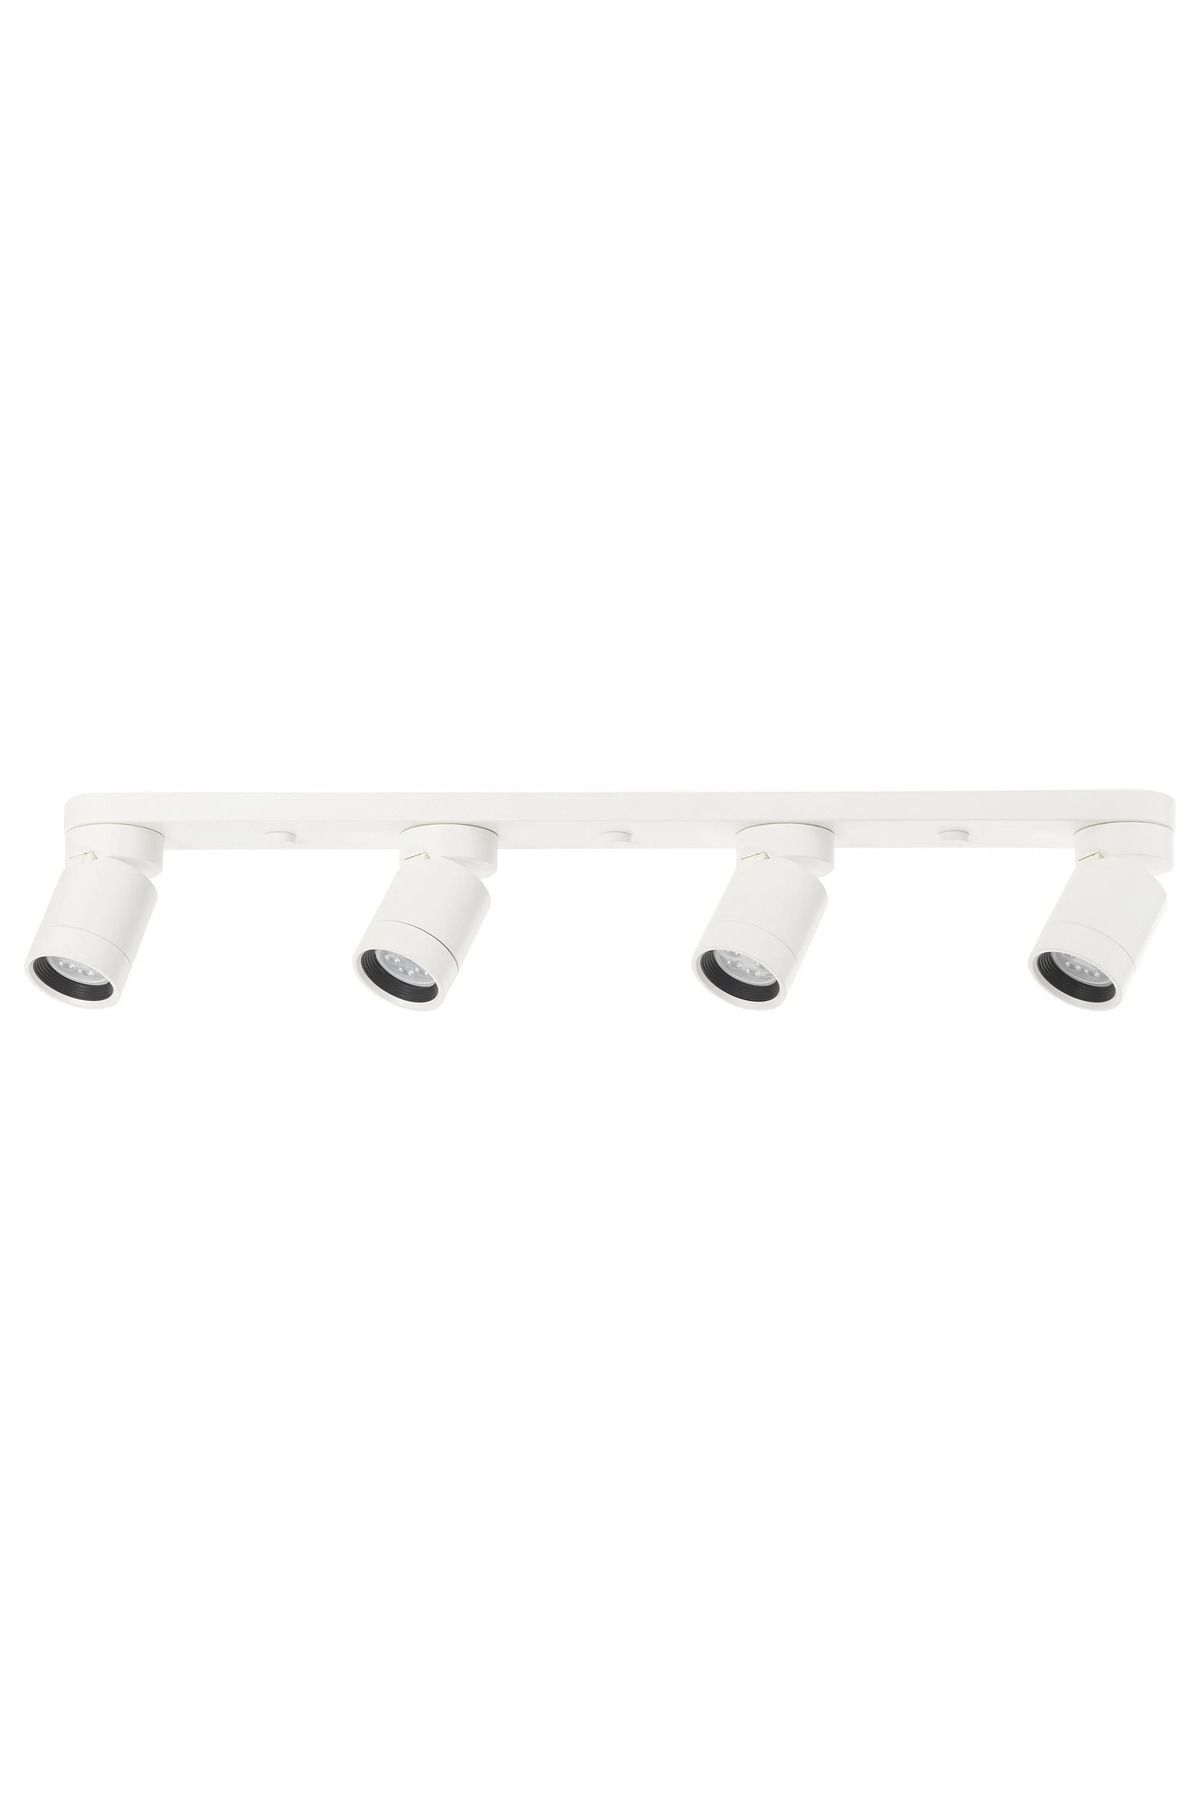 IKEA spot lamba, beyaz, 73 cm, 4 spotlu